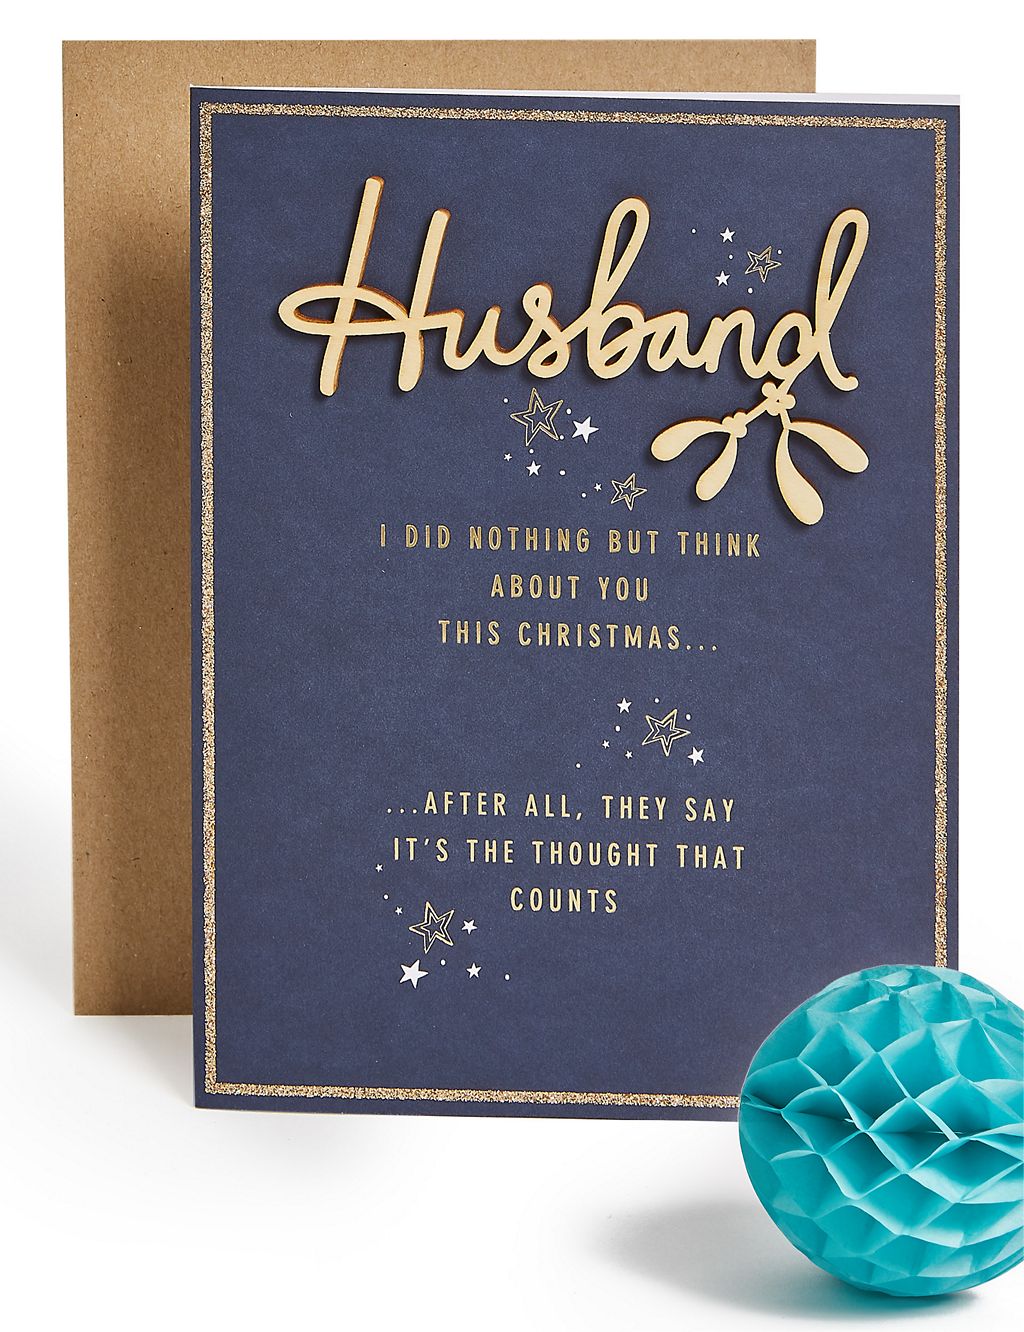 Husband Fun Christmas Charity Card 3 of 4